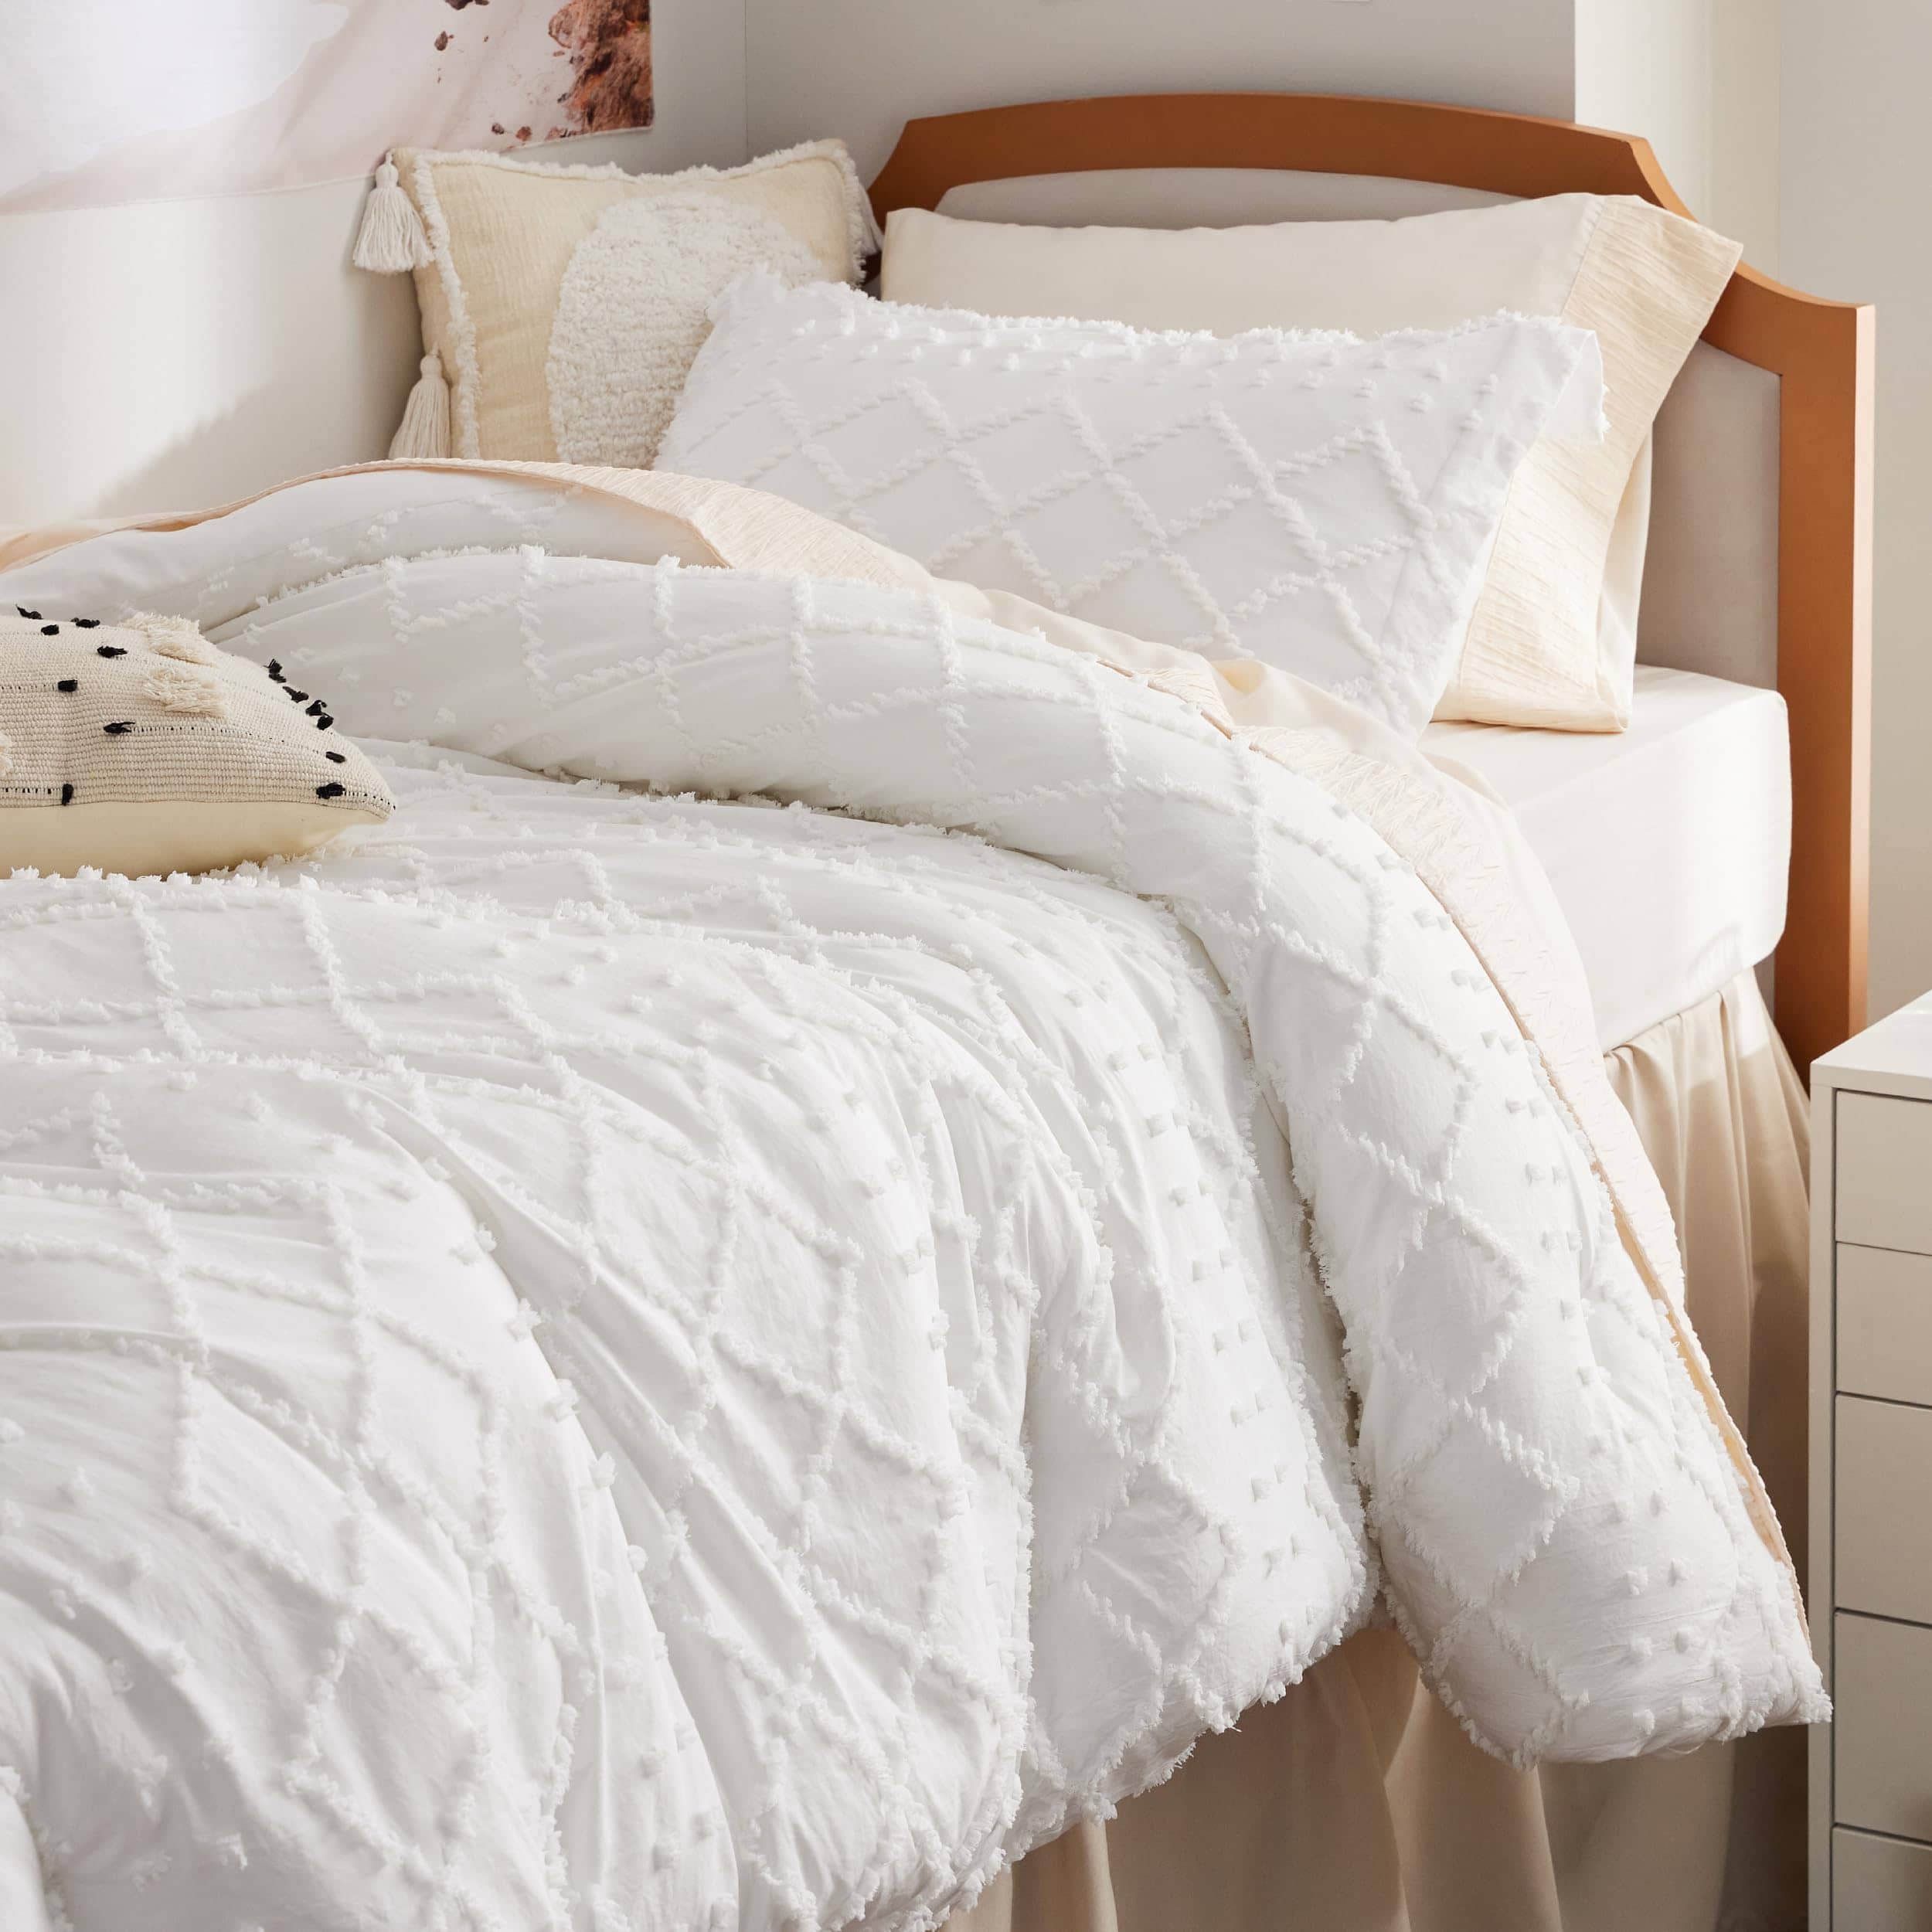 Grey Boho Comforter Set King,White Stripe Comforter Reversible Soft  Microfiber B